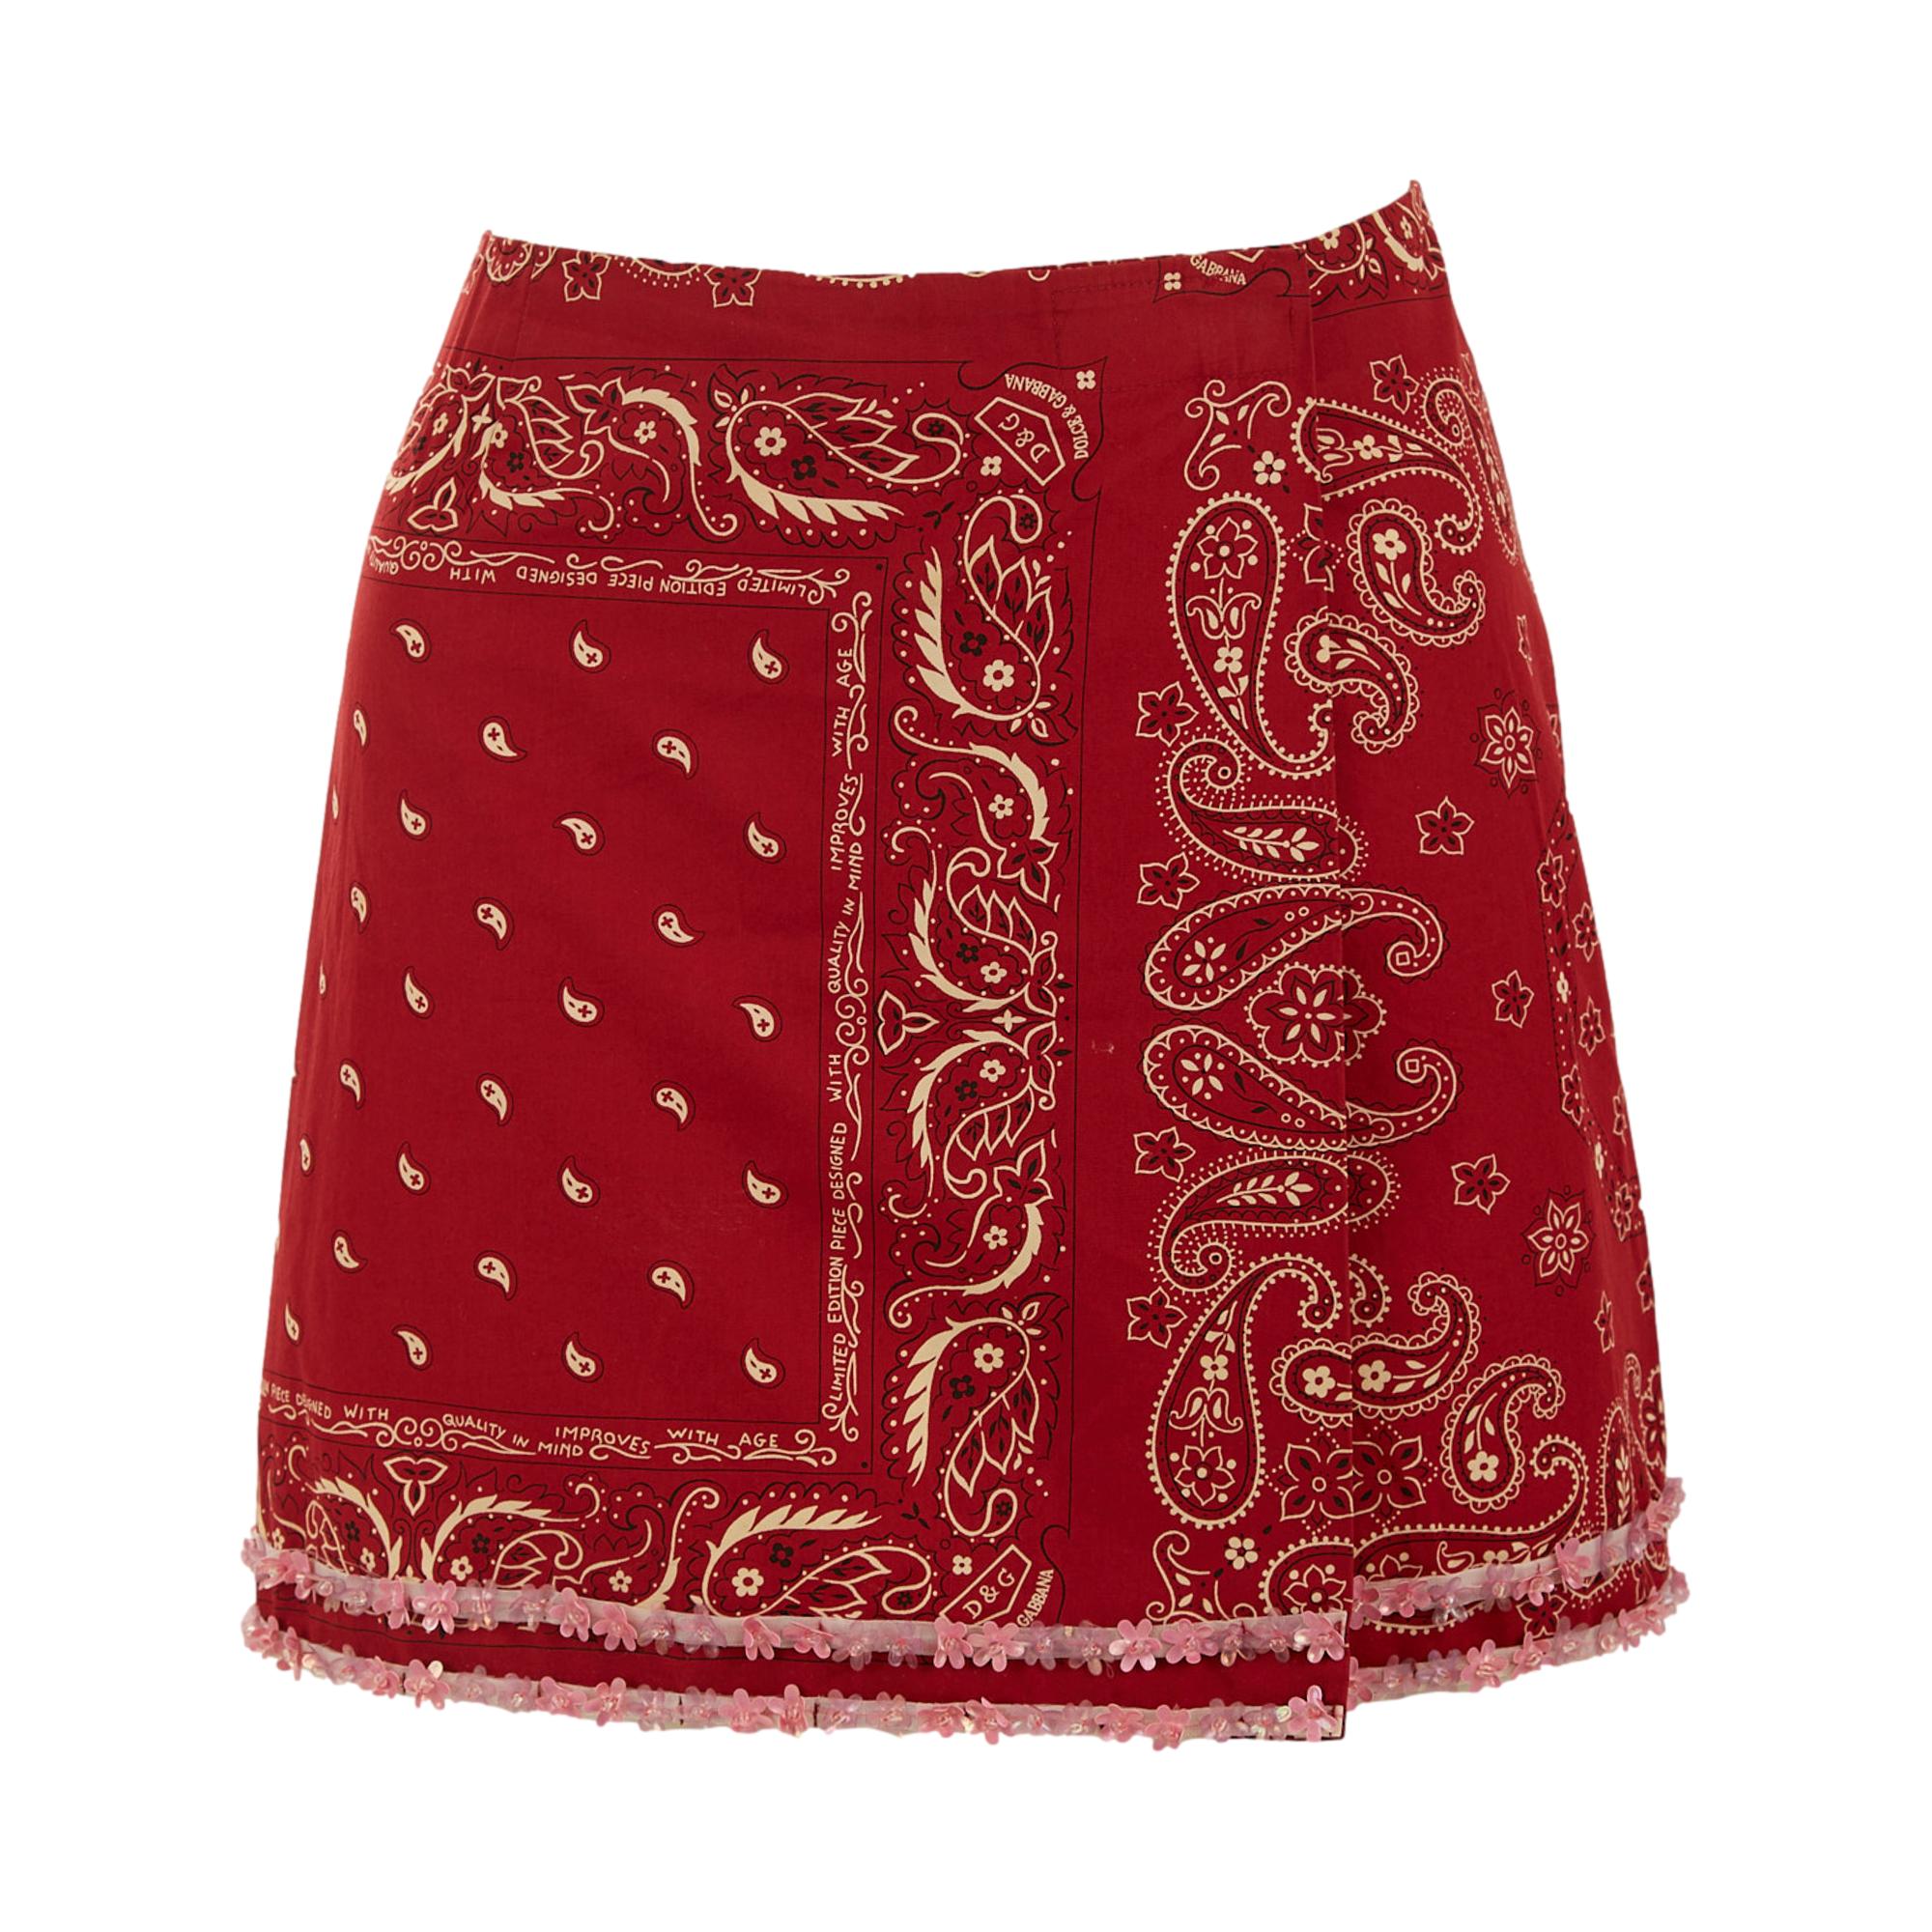 Dolce & Gabbana Red Bandana Print Skirt